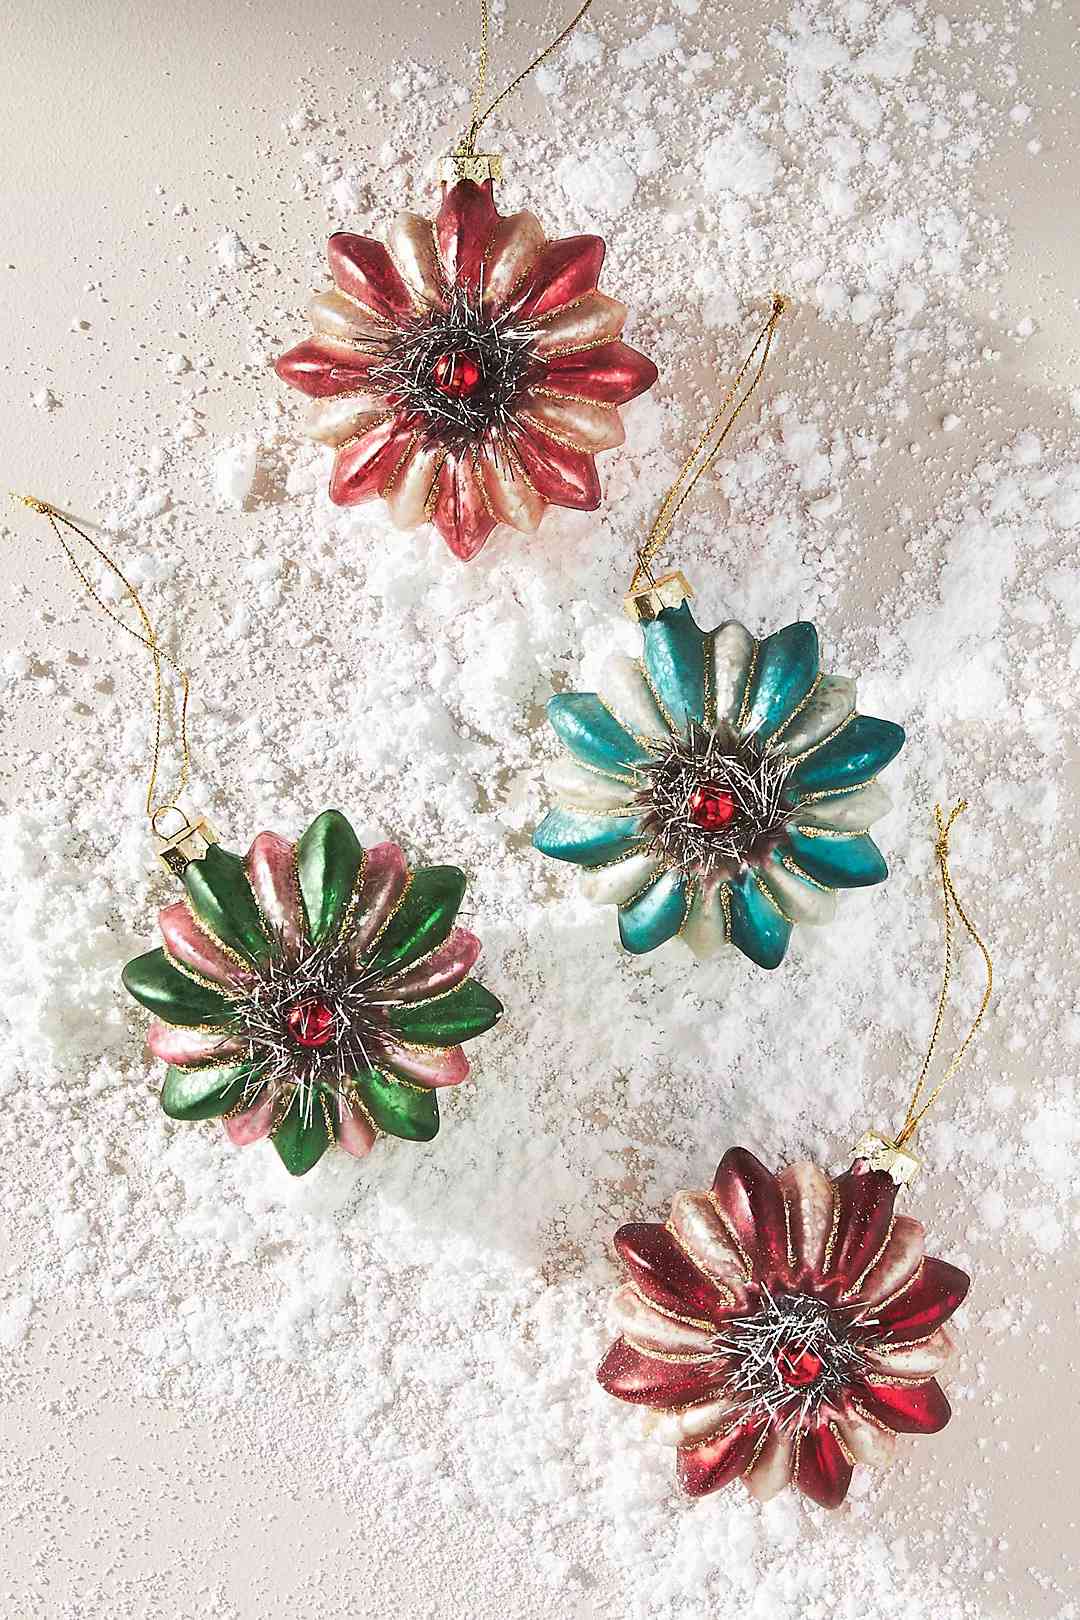 Glass starburst ornaments